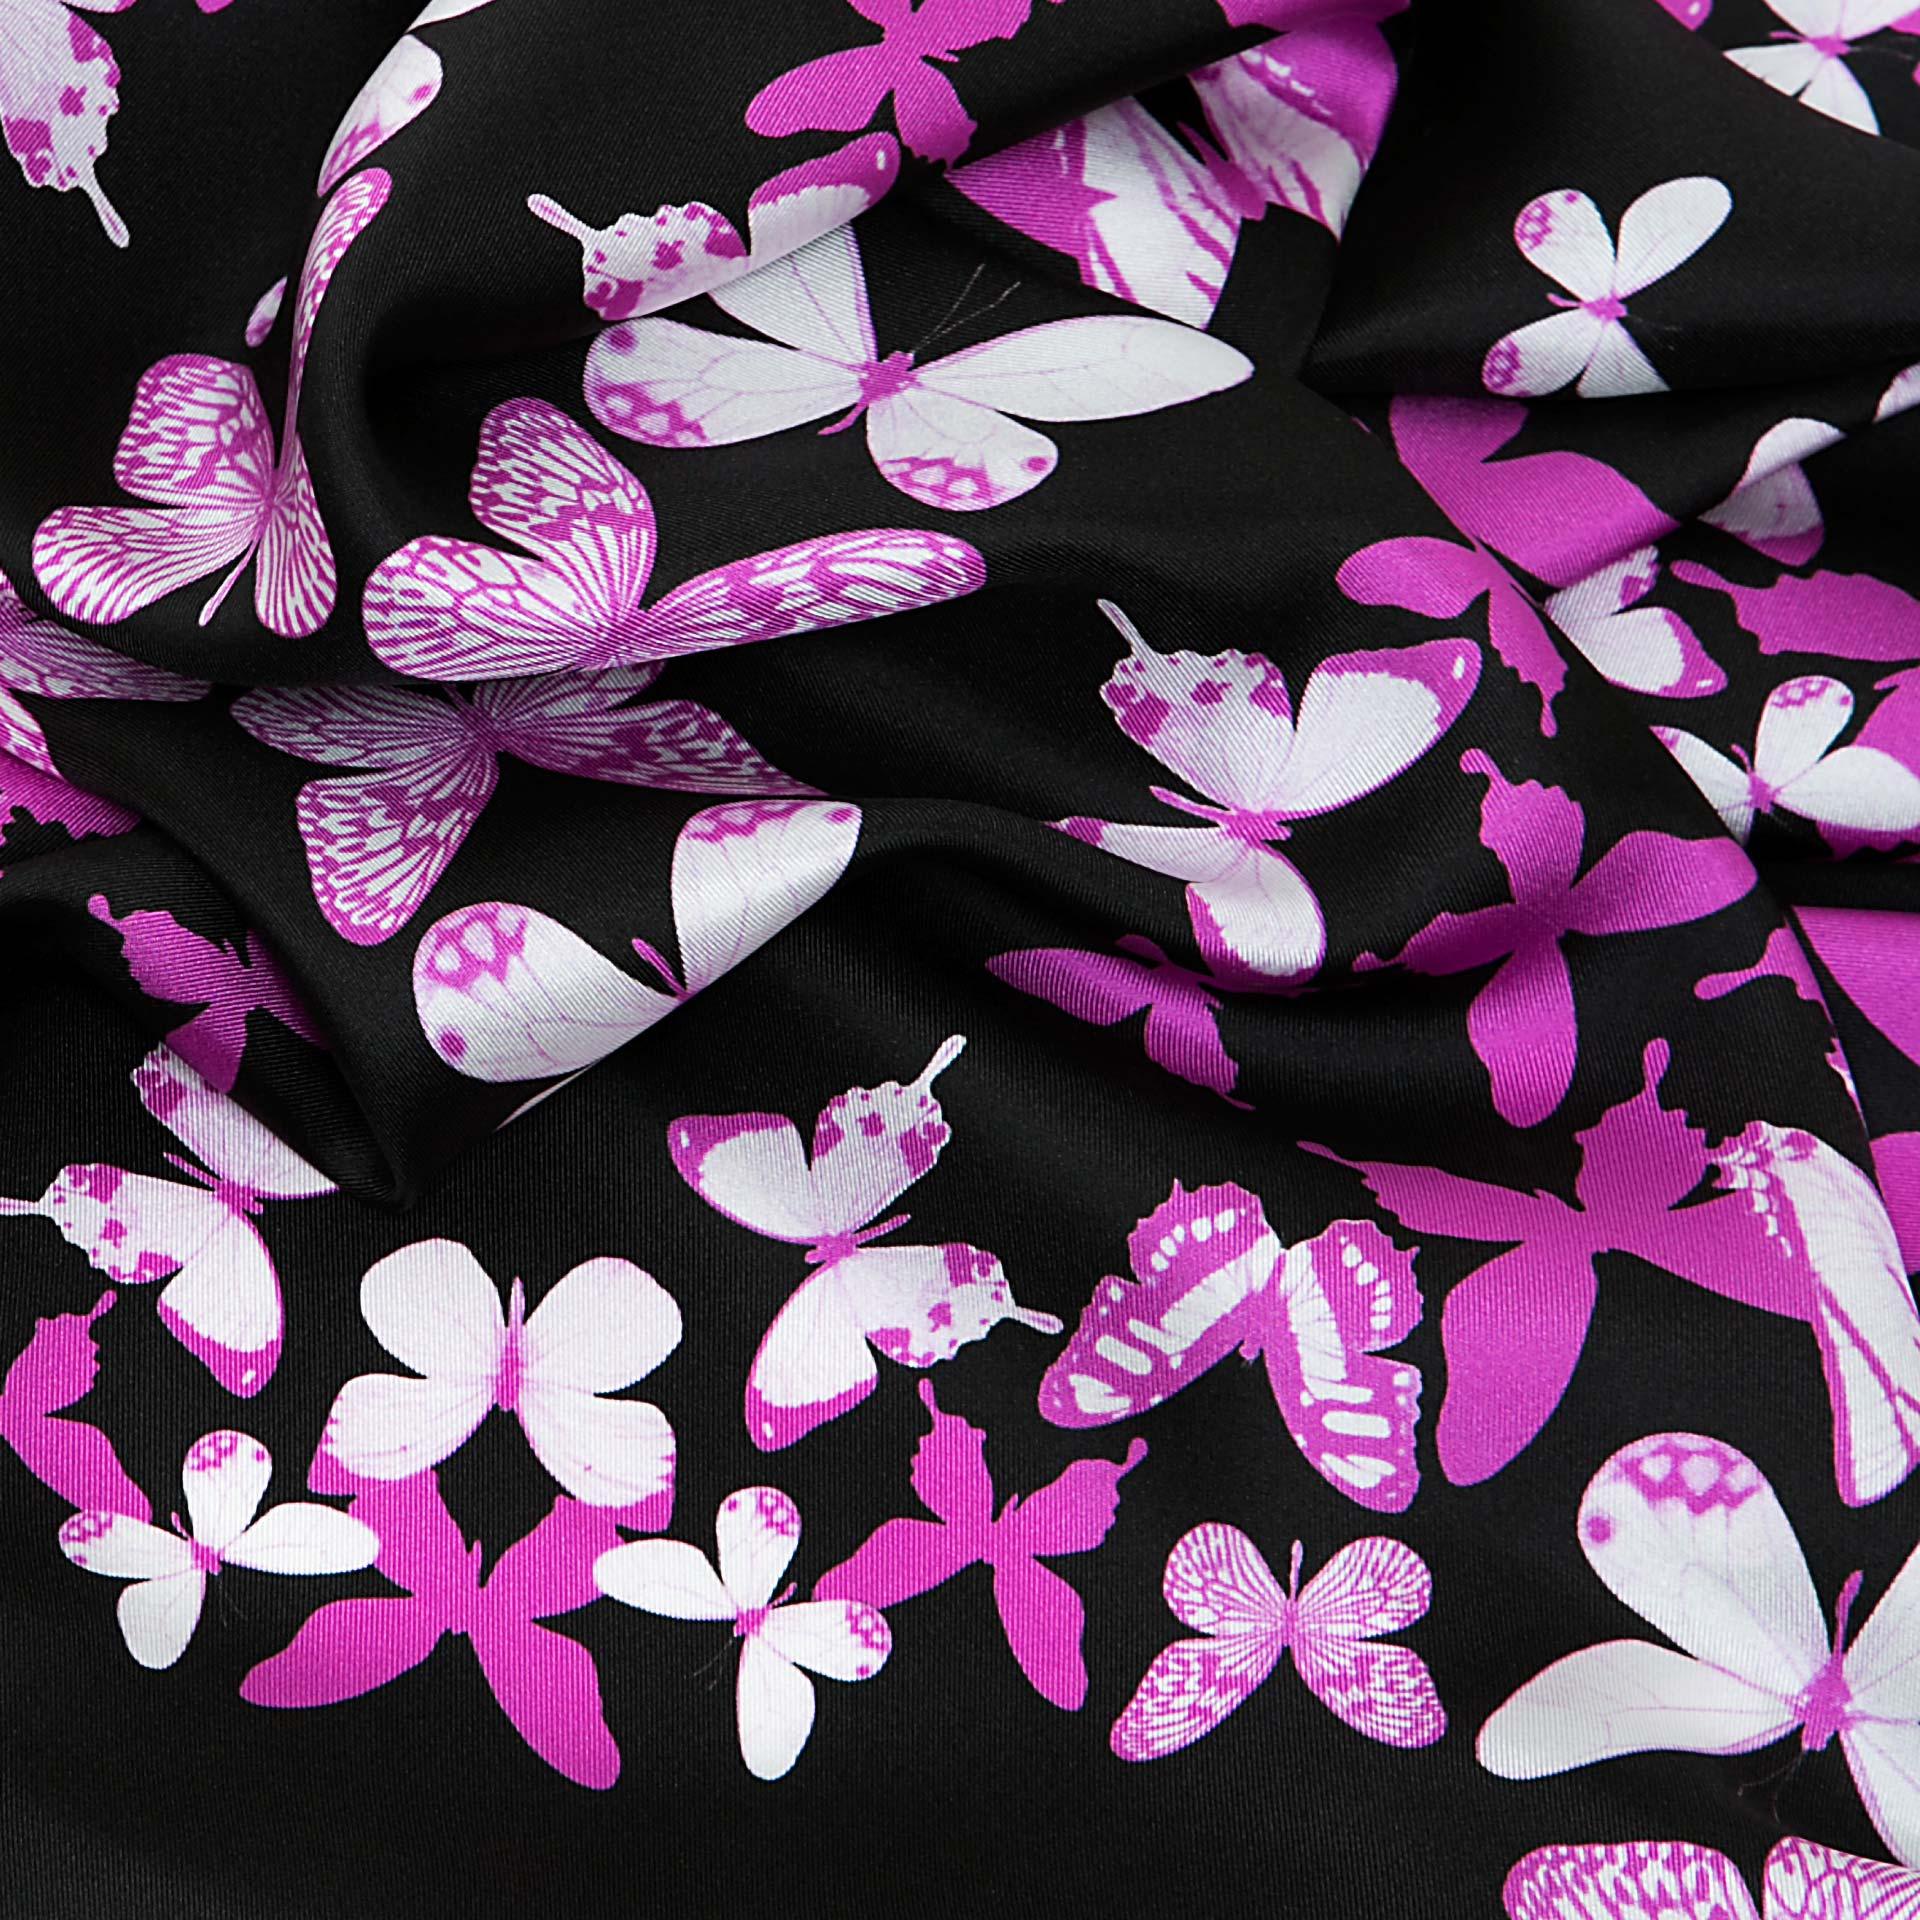 Fuchsia Butterflies Black Silk Scarf - A blend of London's design and Italian craftsmanship, a luxurious gift choice.